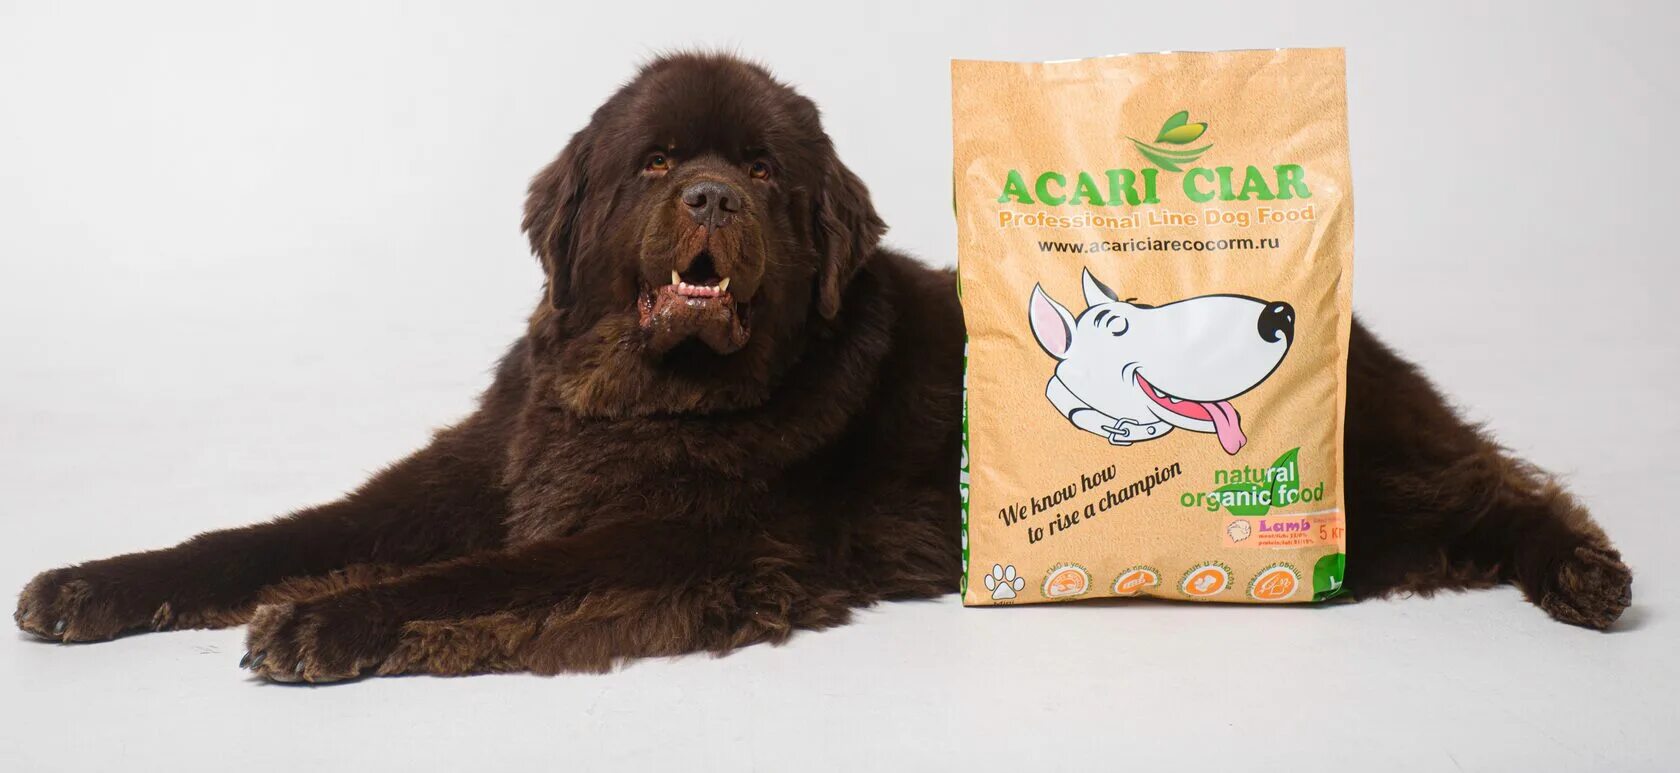 Acari ciar корма купить. Acari Ciar корм для собак. Акари Киар корм для собак производитель. Acari Ciar корм логотип.